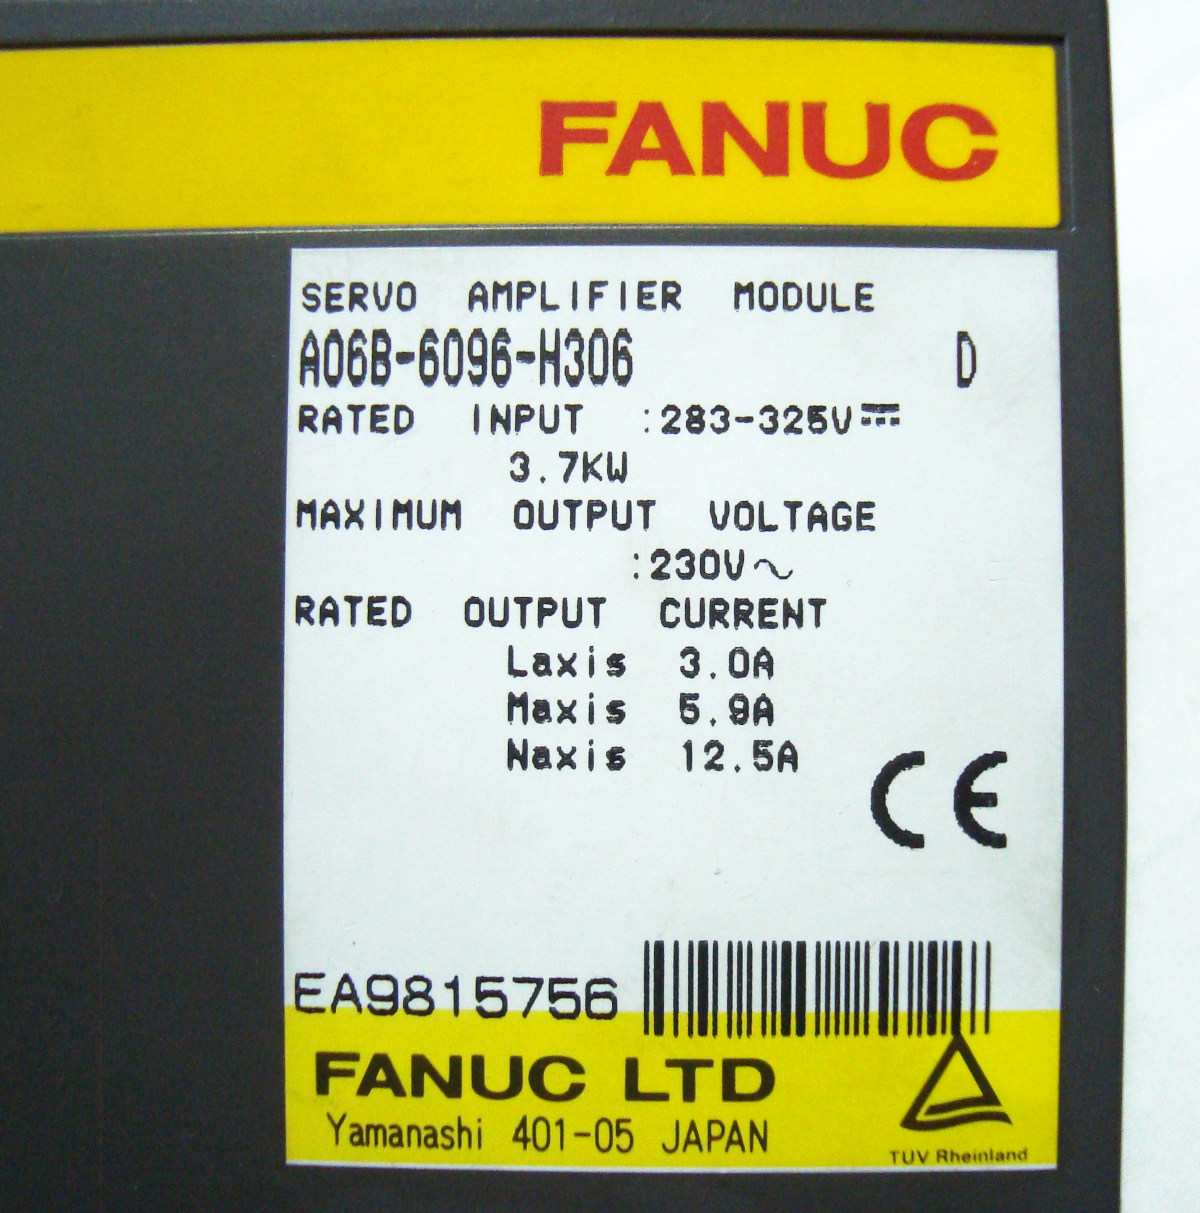 4 Manual A06b-6096-h306 Fanuc Unterlagen Pdf File